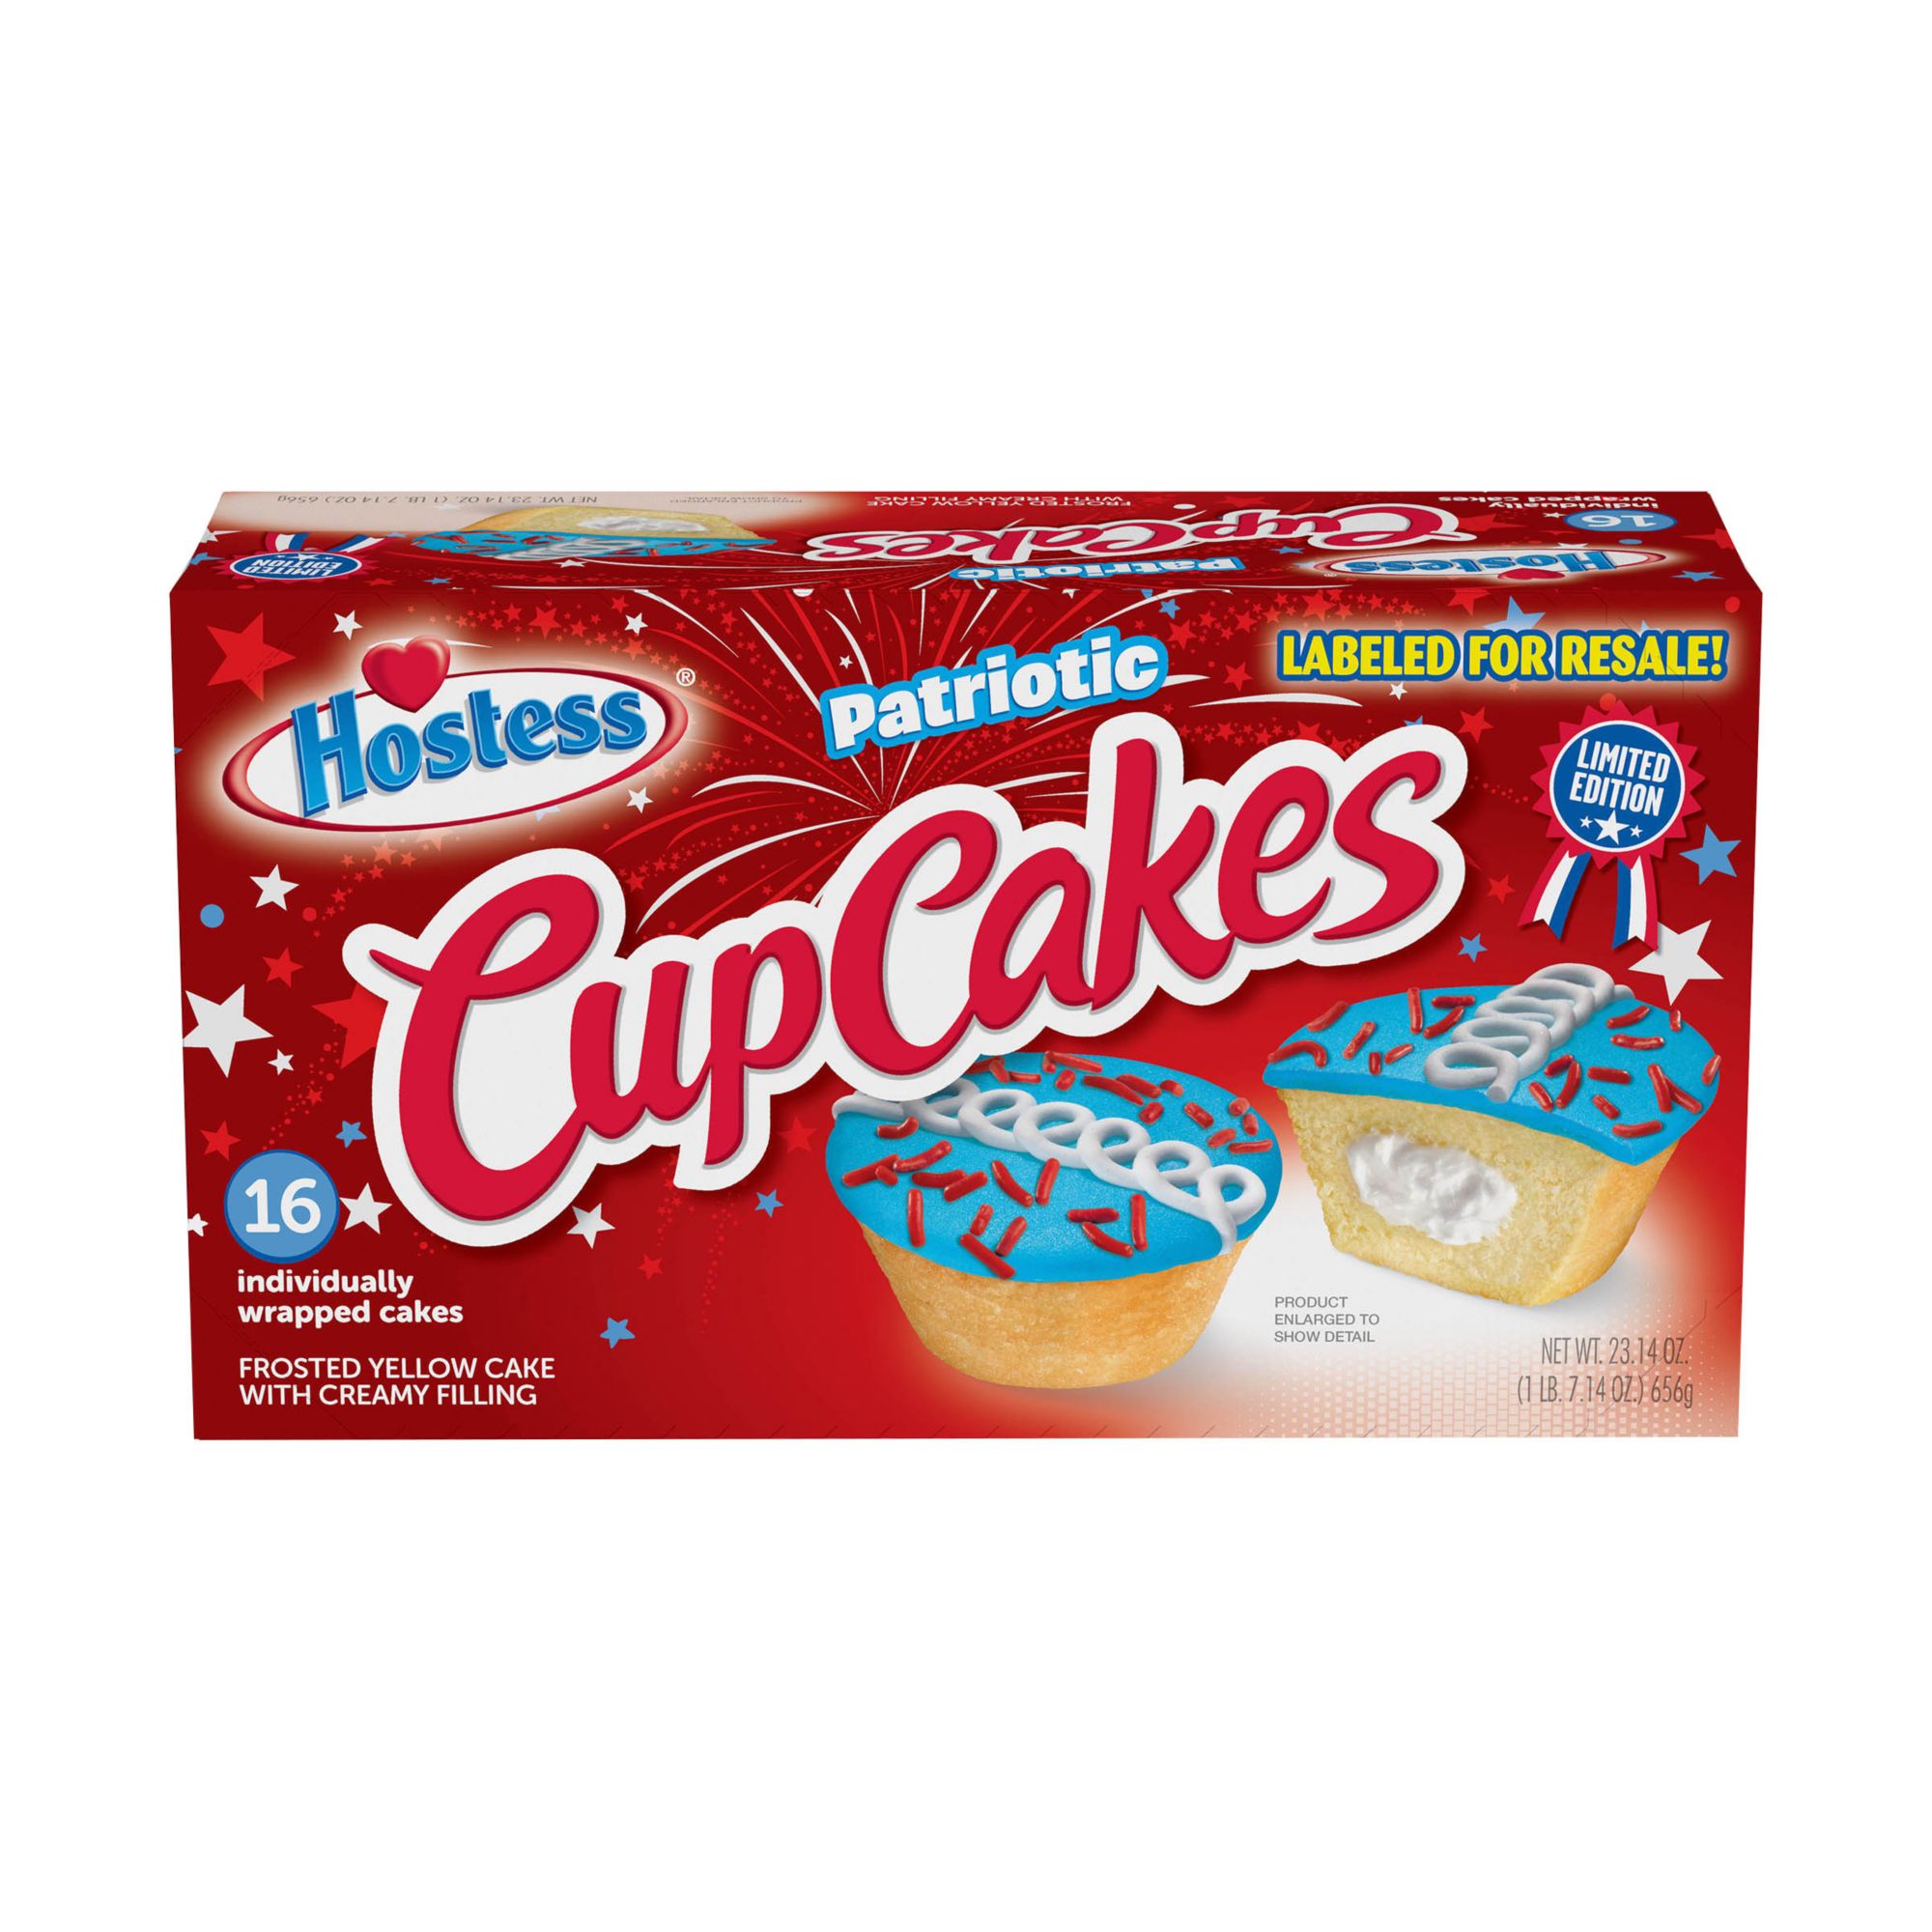 Hostess Patriotic Cupcakes, 16 ct.